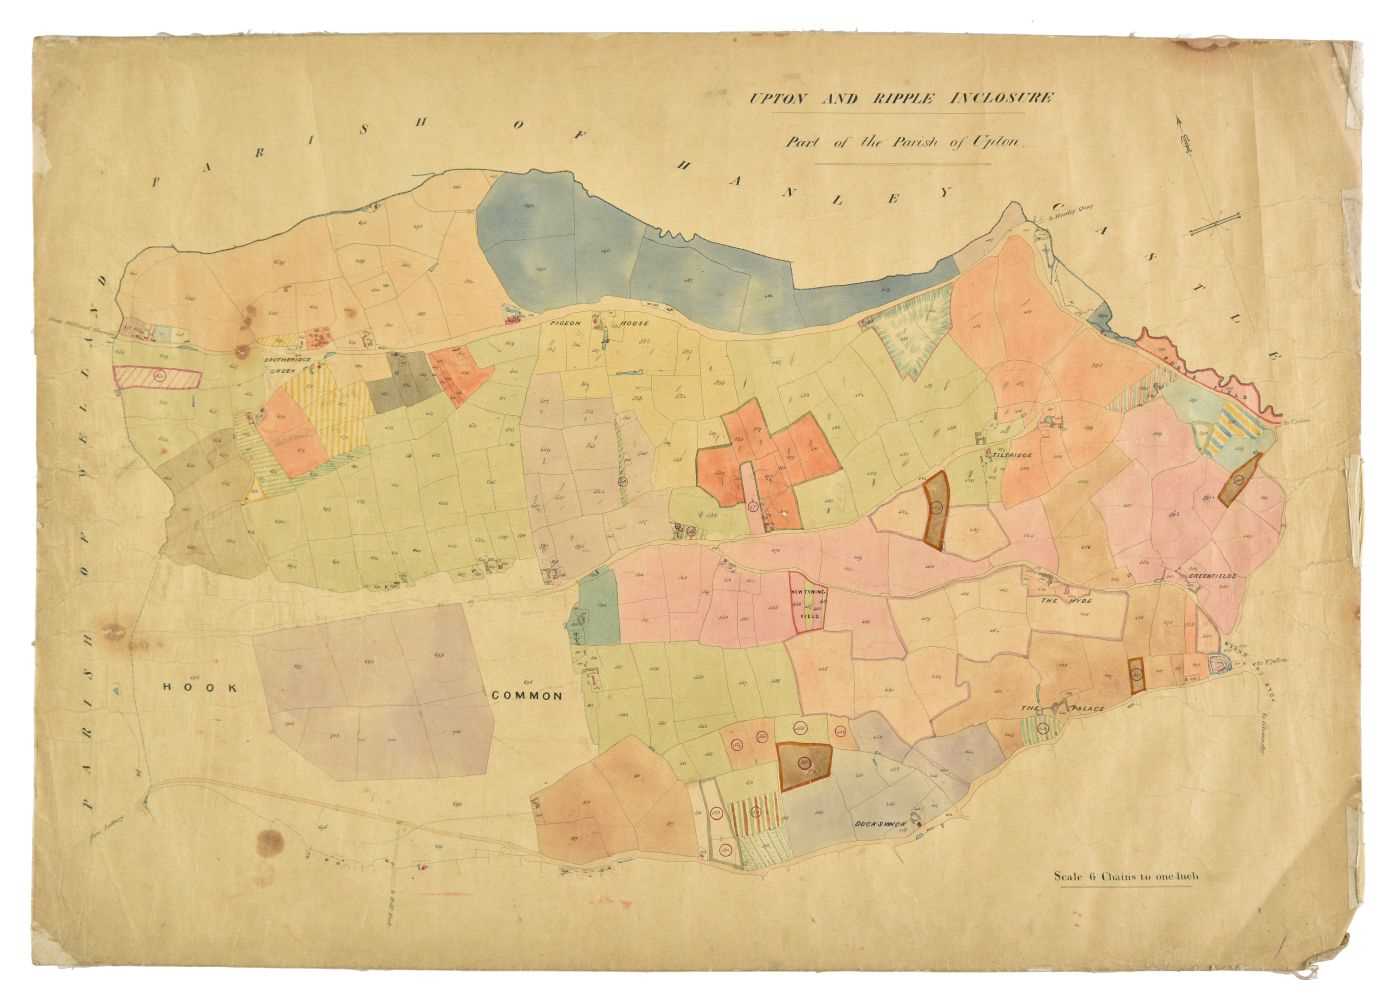 Lot 131 - Manuscript maps. Upton and Ripple Enclosure, 1821 - 1871